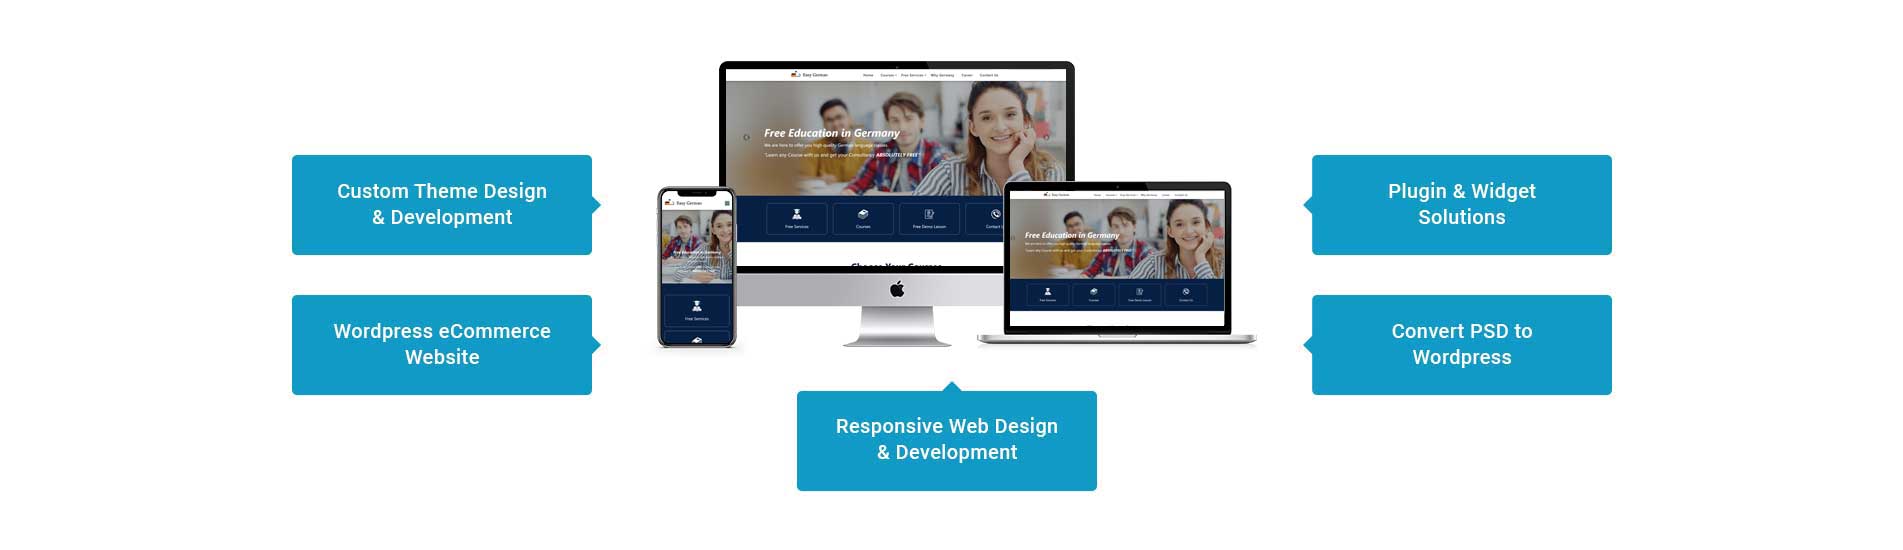 Benefits of Responsive and WordPress Web Design Banner